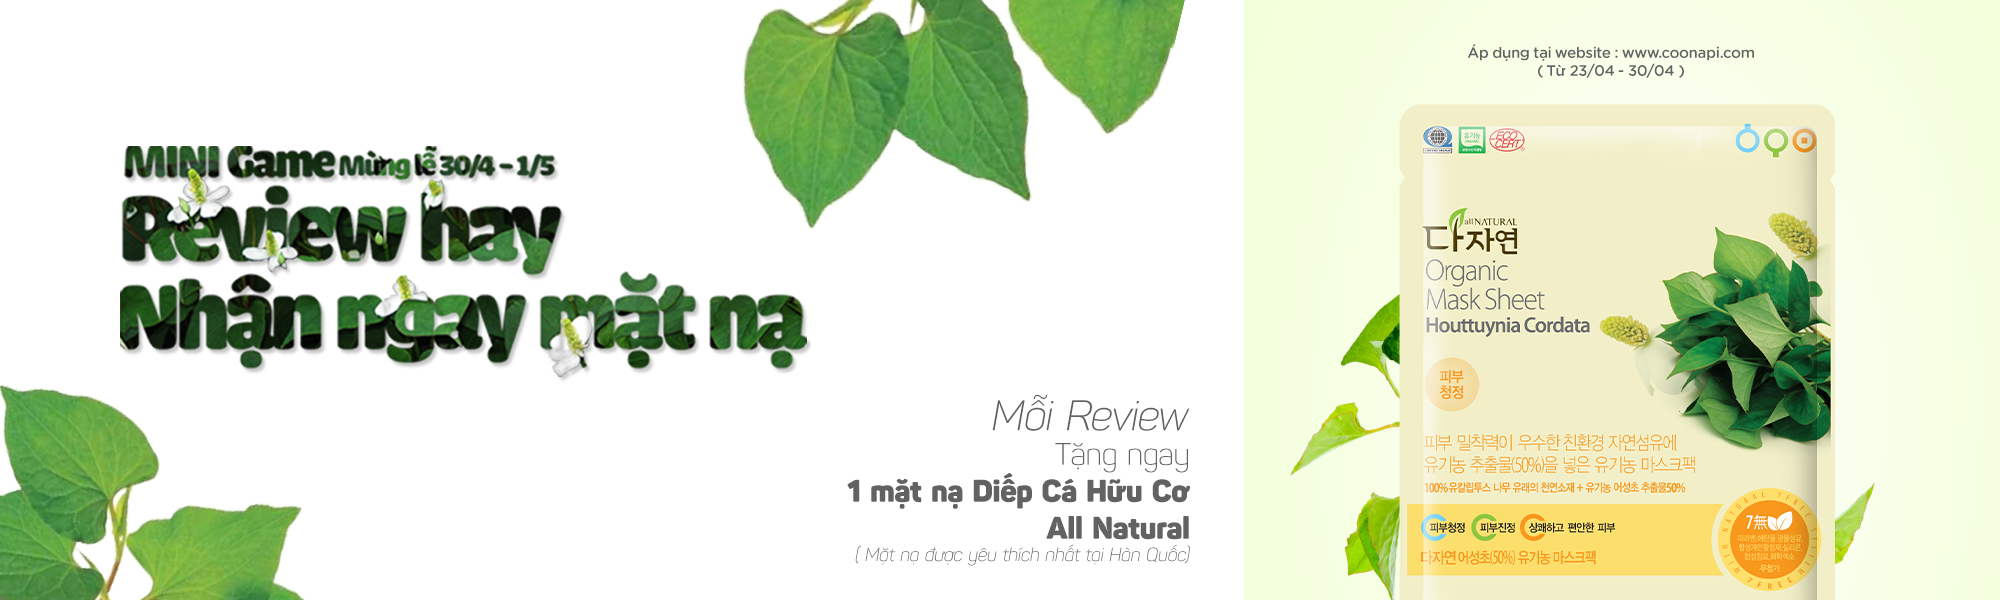 review-nhan-qua-mat-na-diep-ca-all-natural